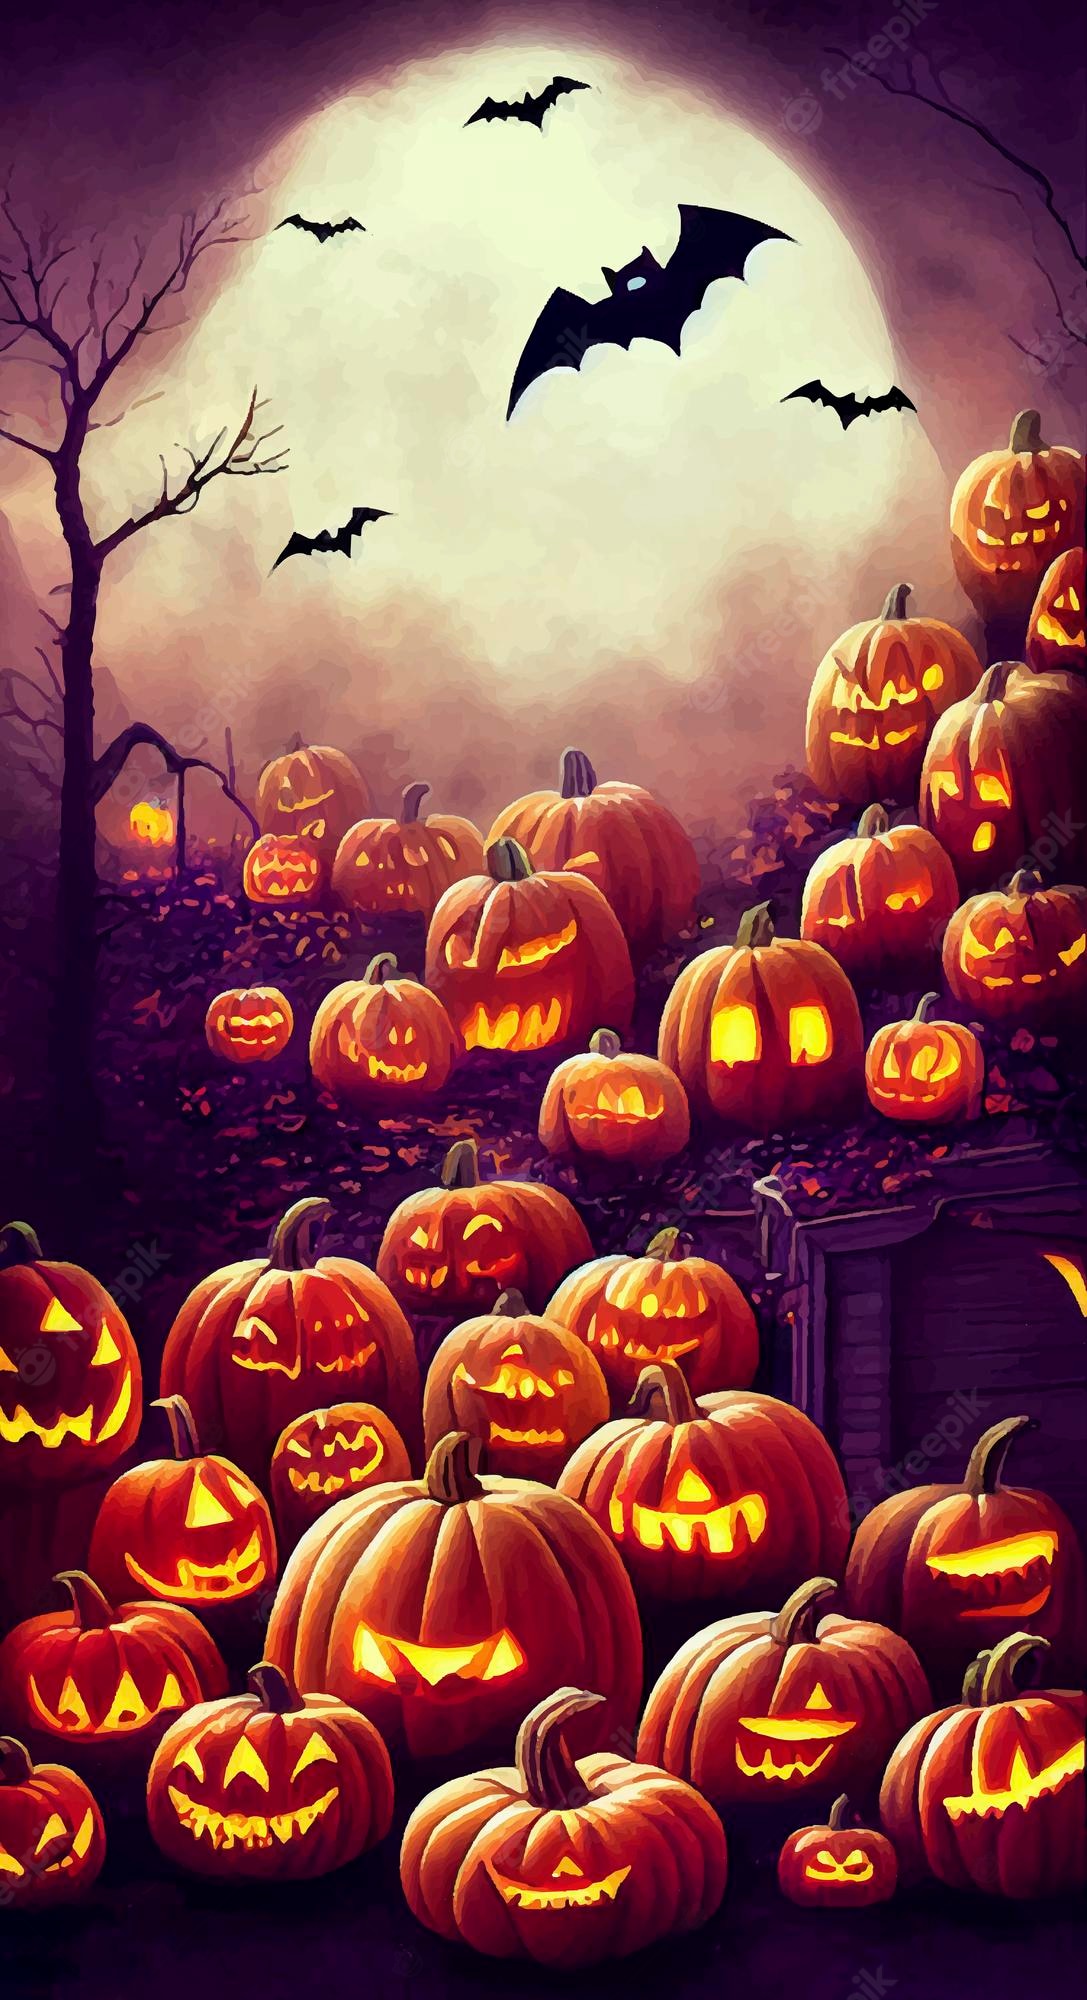 Halloween Pumpkin Android Wallpapers - Wallpaper Cave